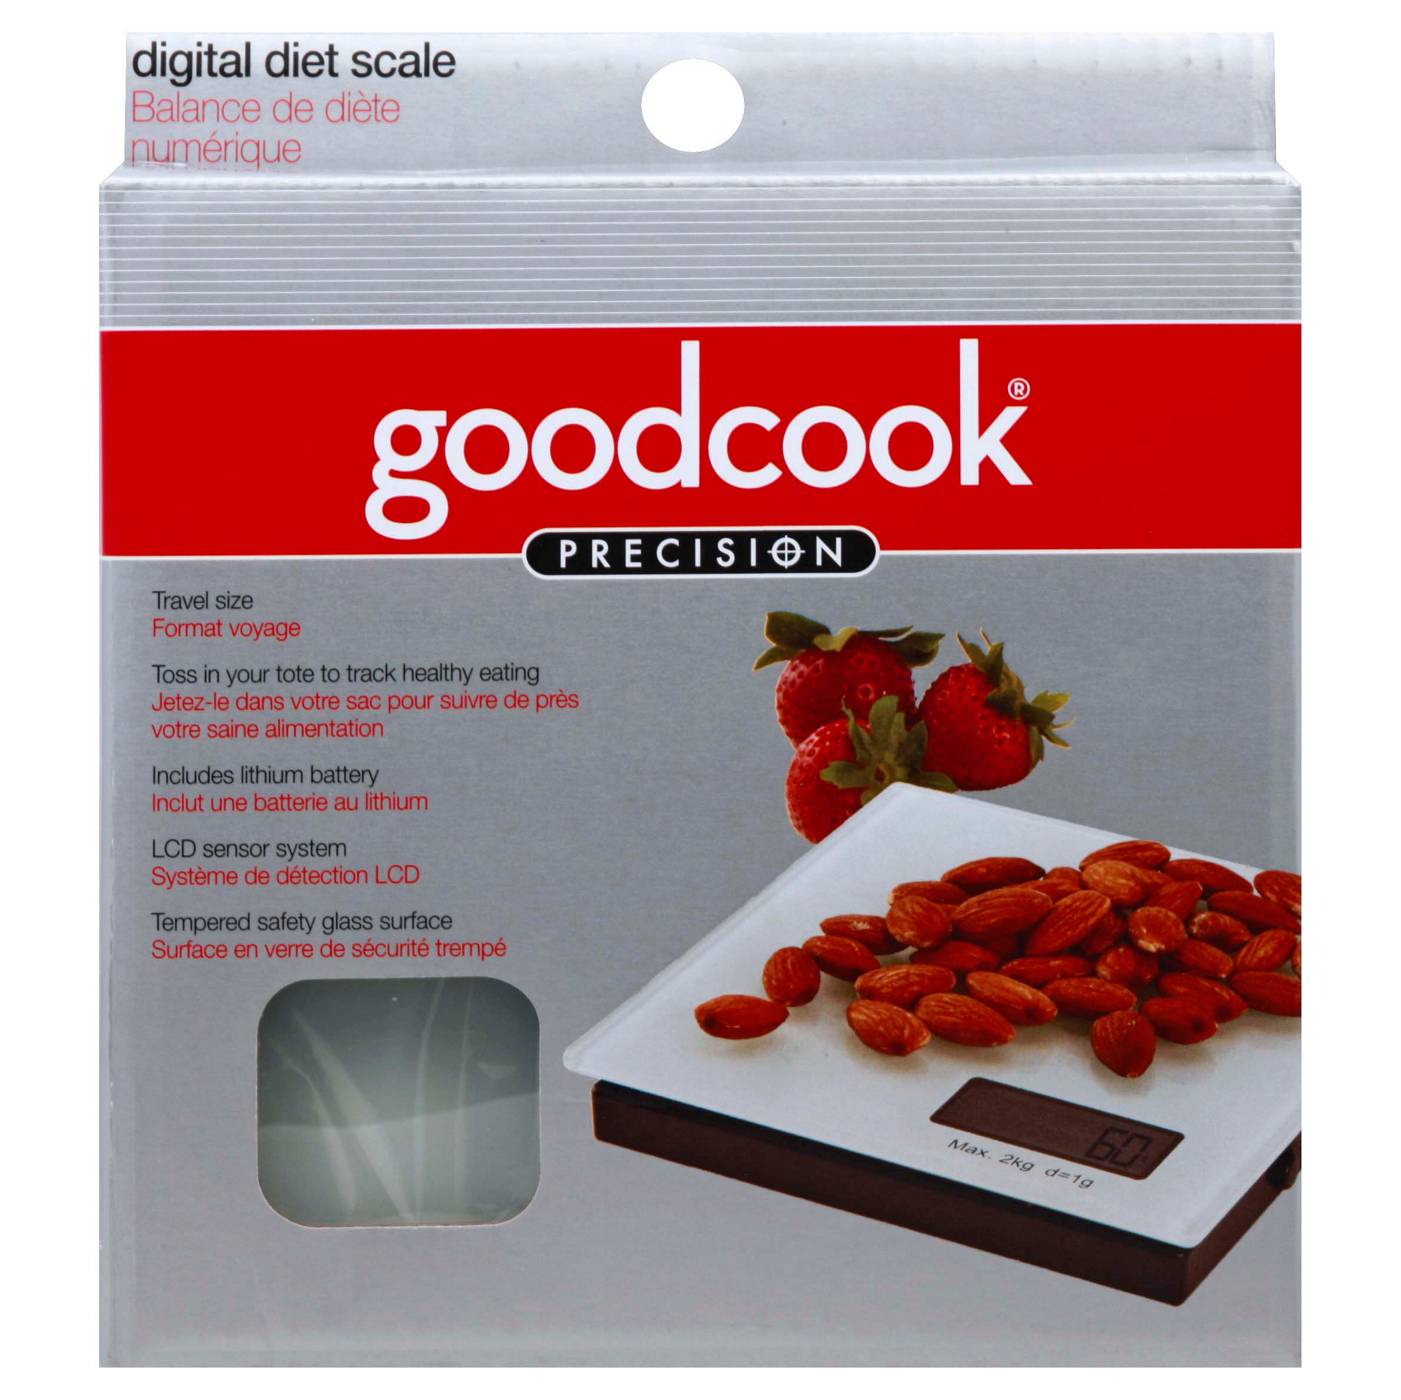 GoodCook Precision Digital Scale; image 1 of 2